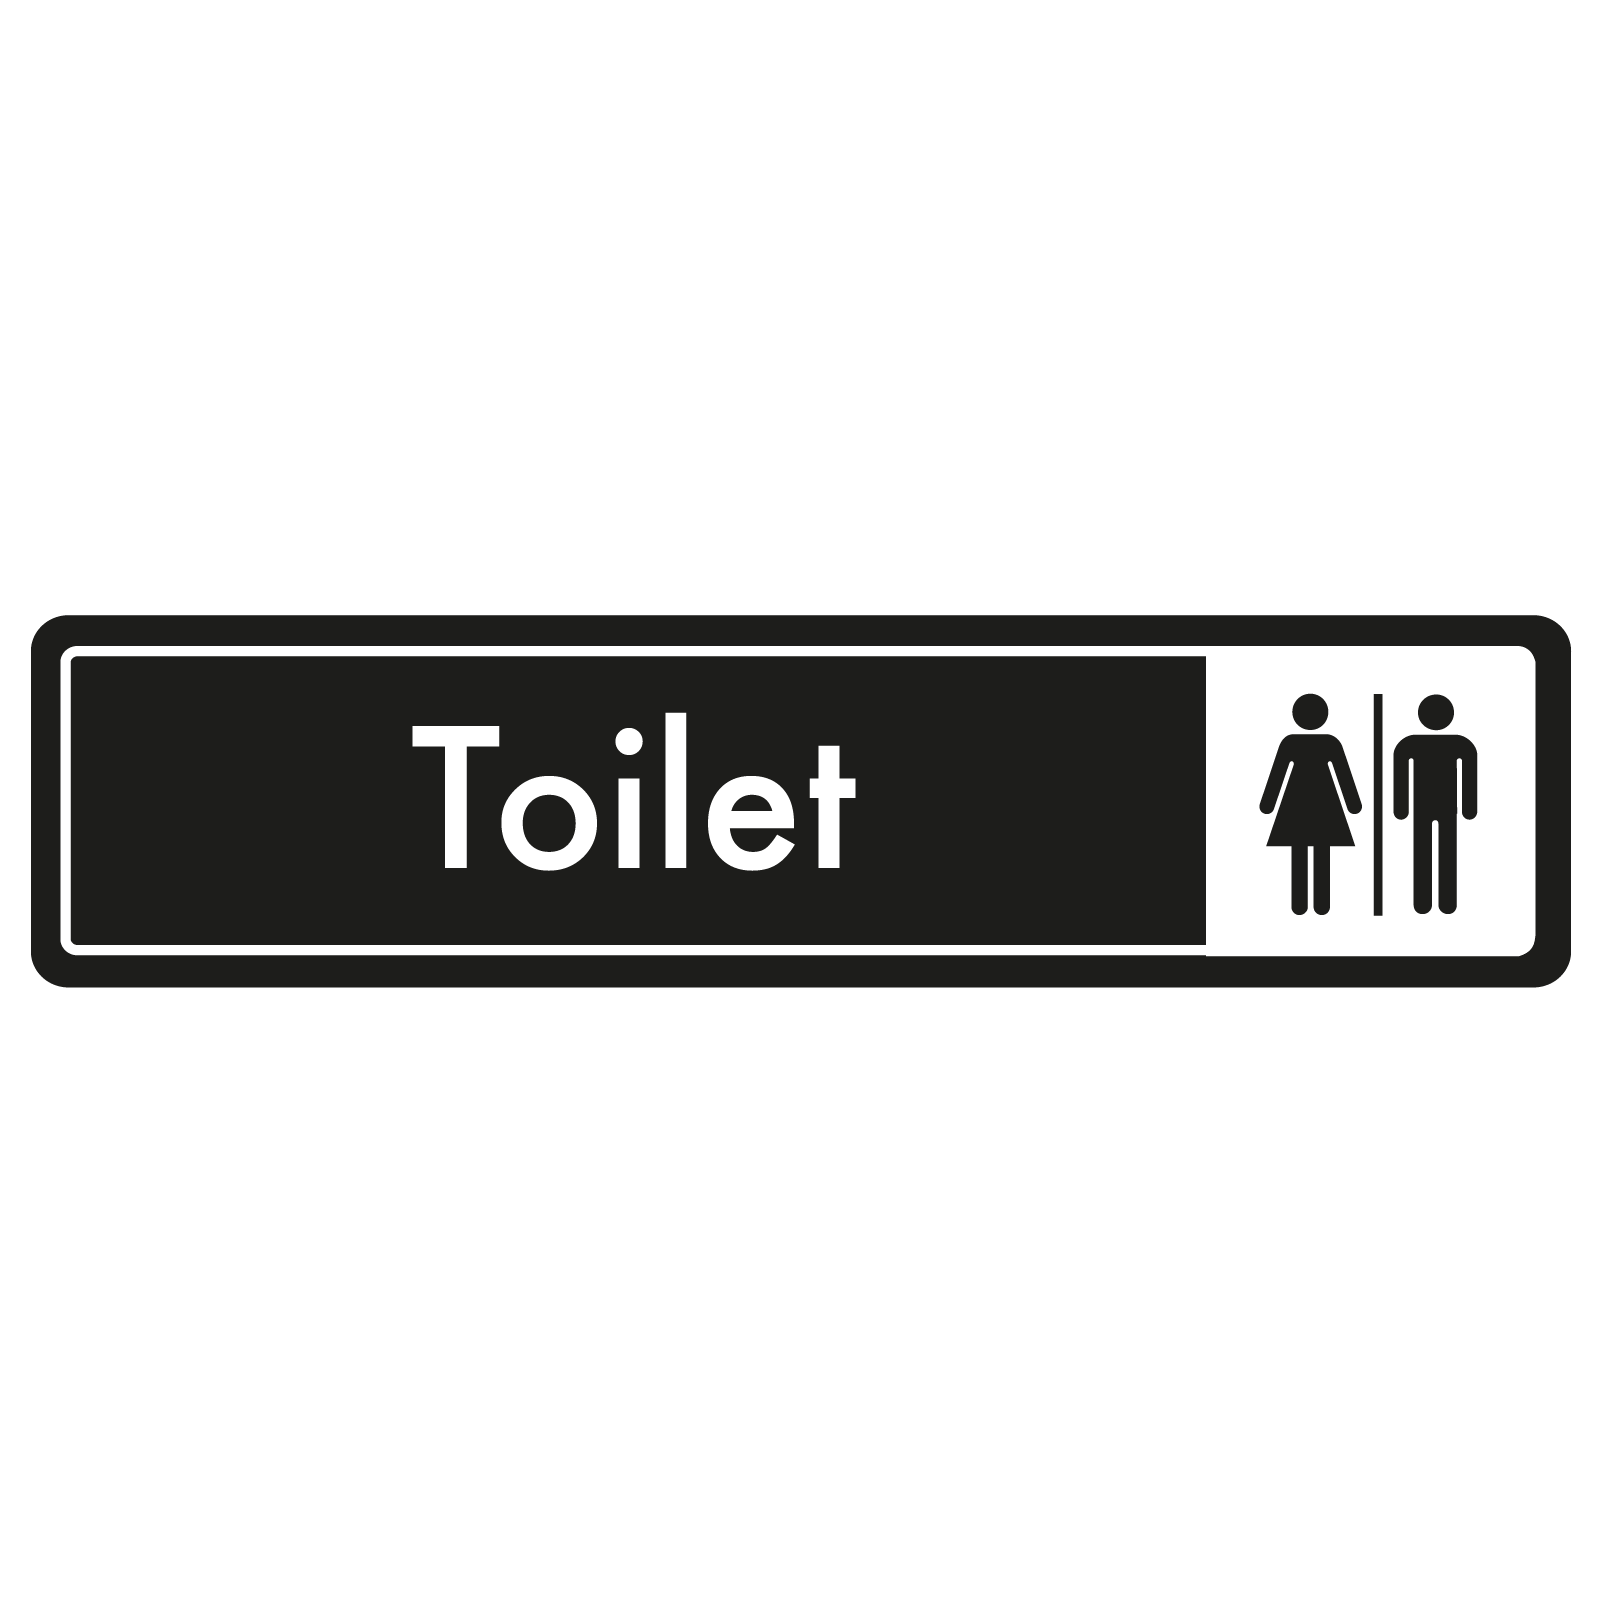 Toilet Door Sign - White on Black